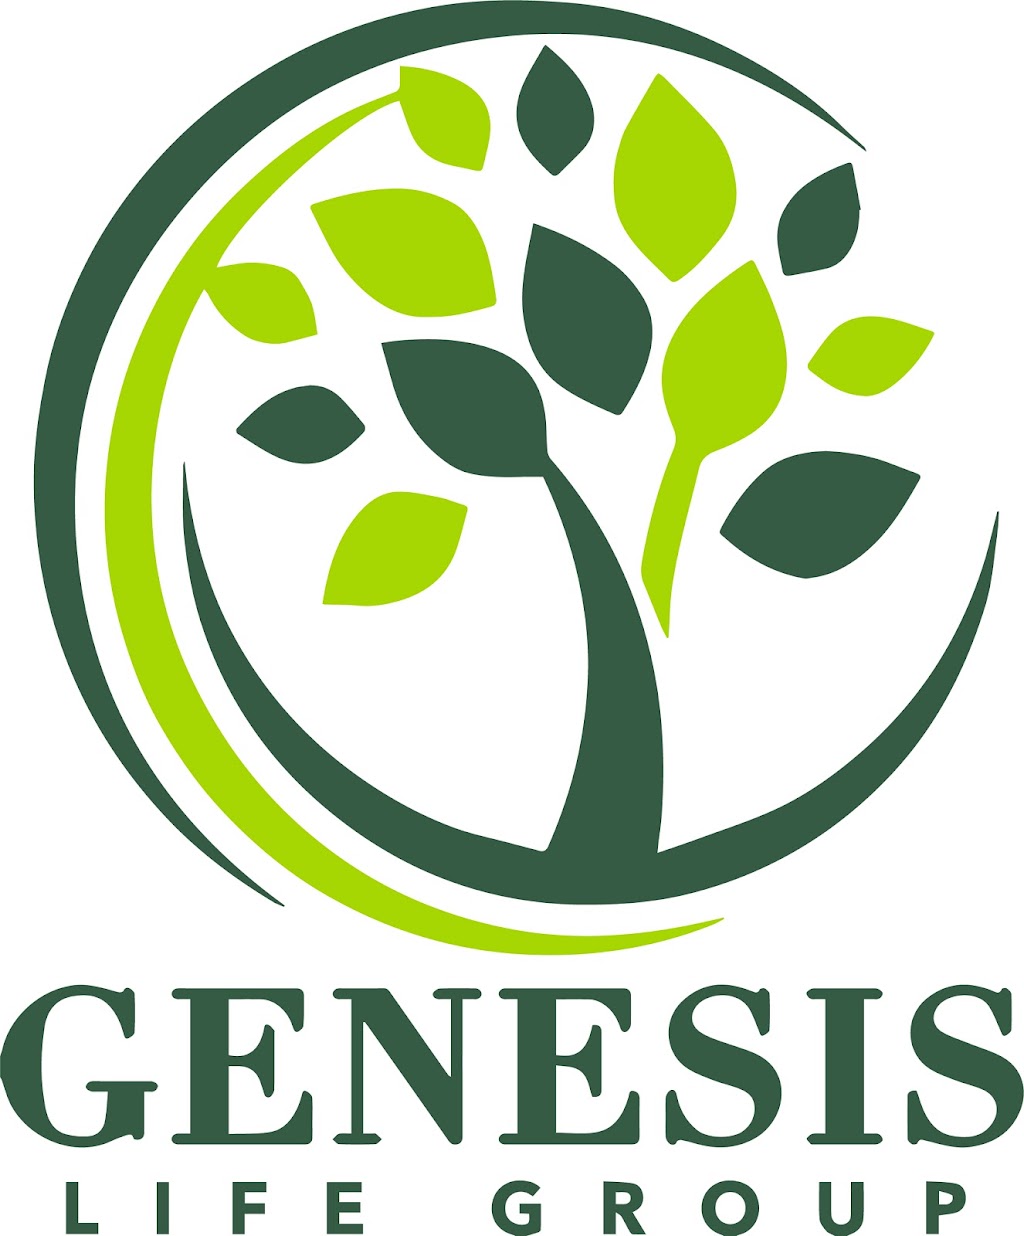 Genesis Life Group | 212 N Marshall St, Graham, NC 27253 | Phone: (866) 355-7221